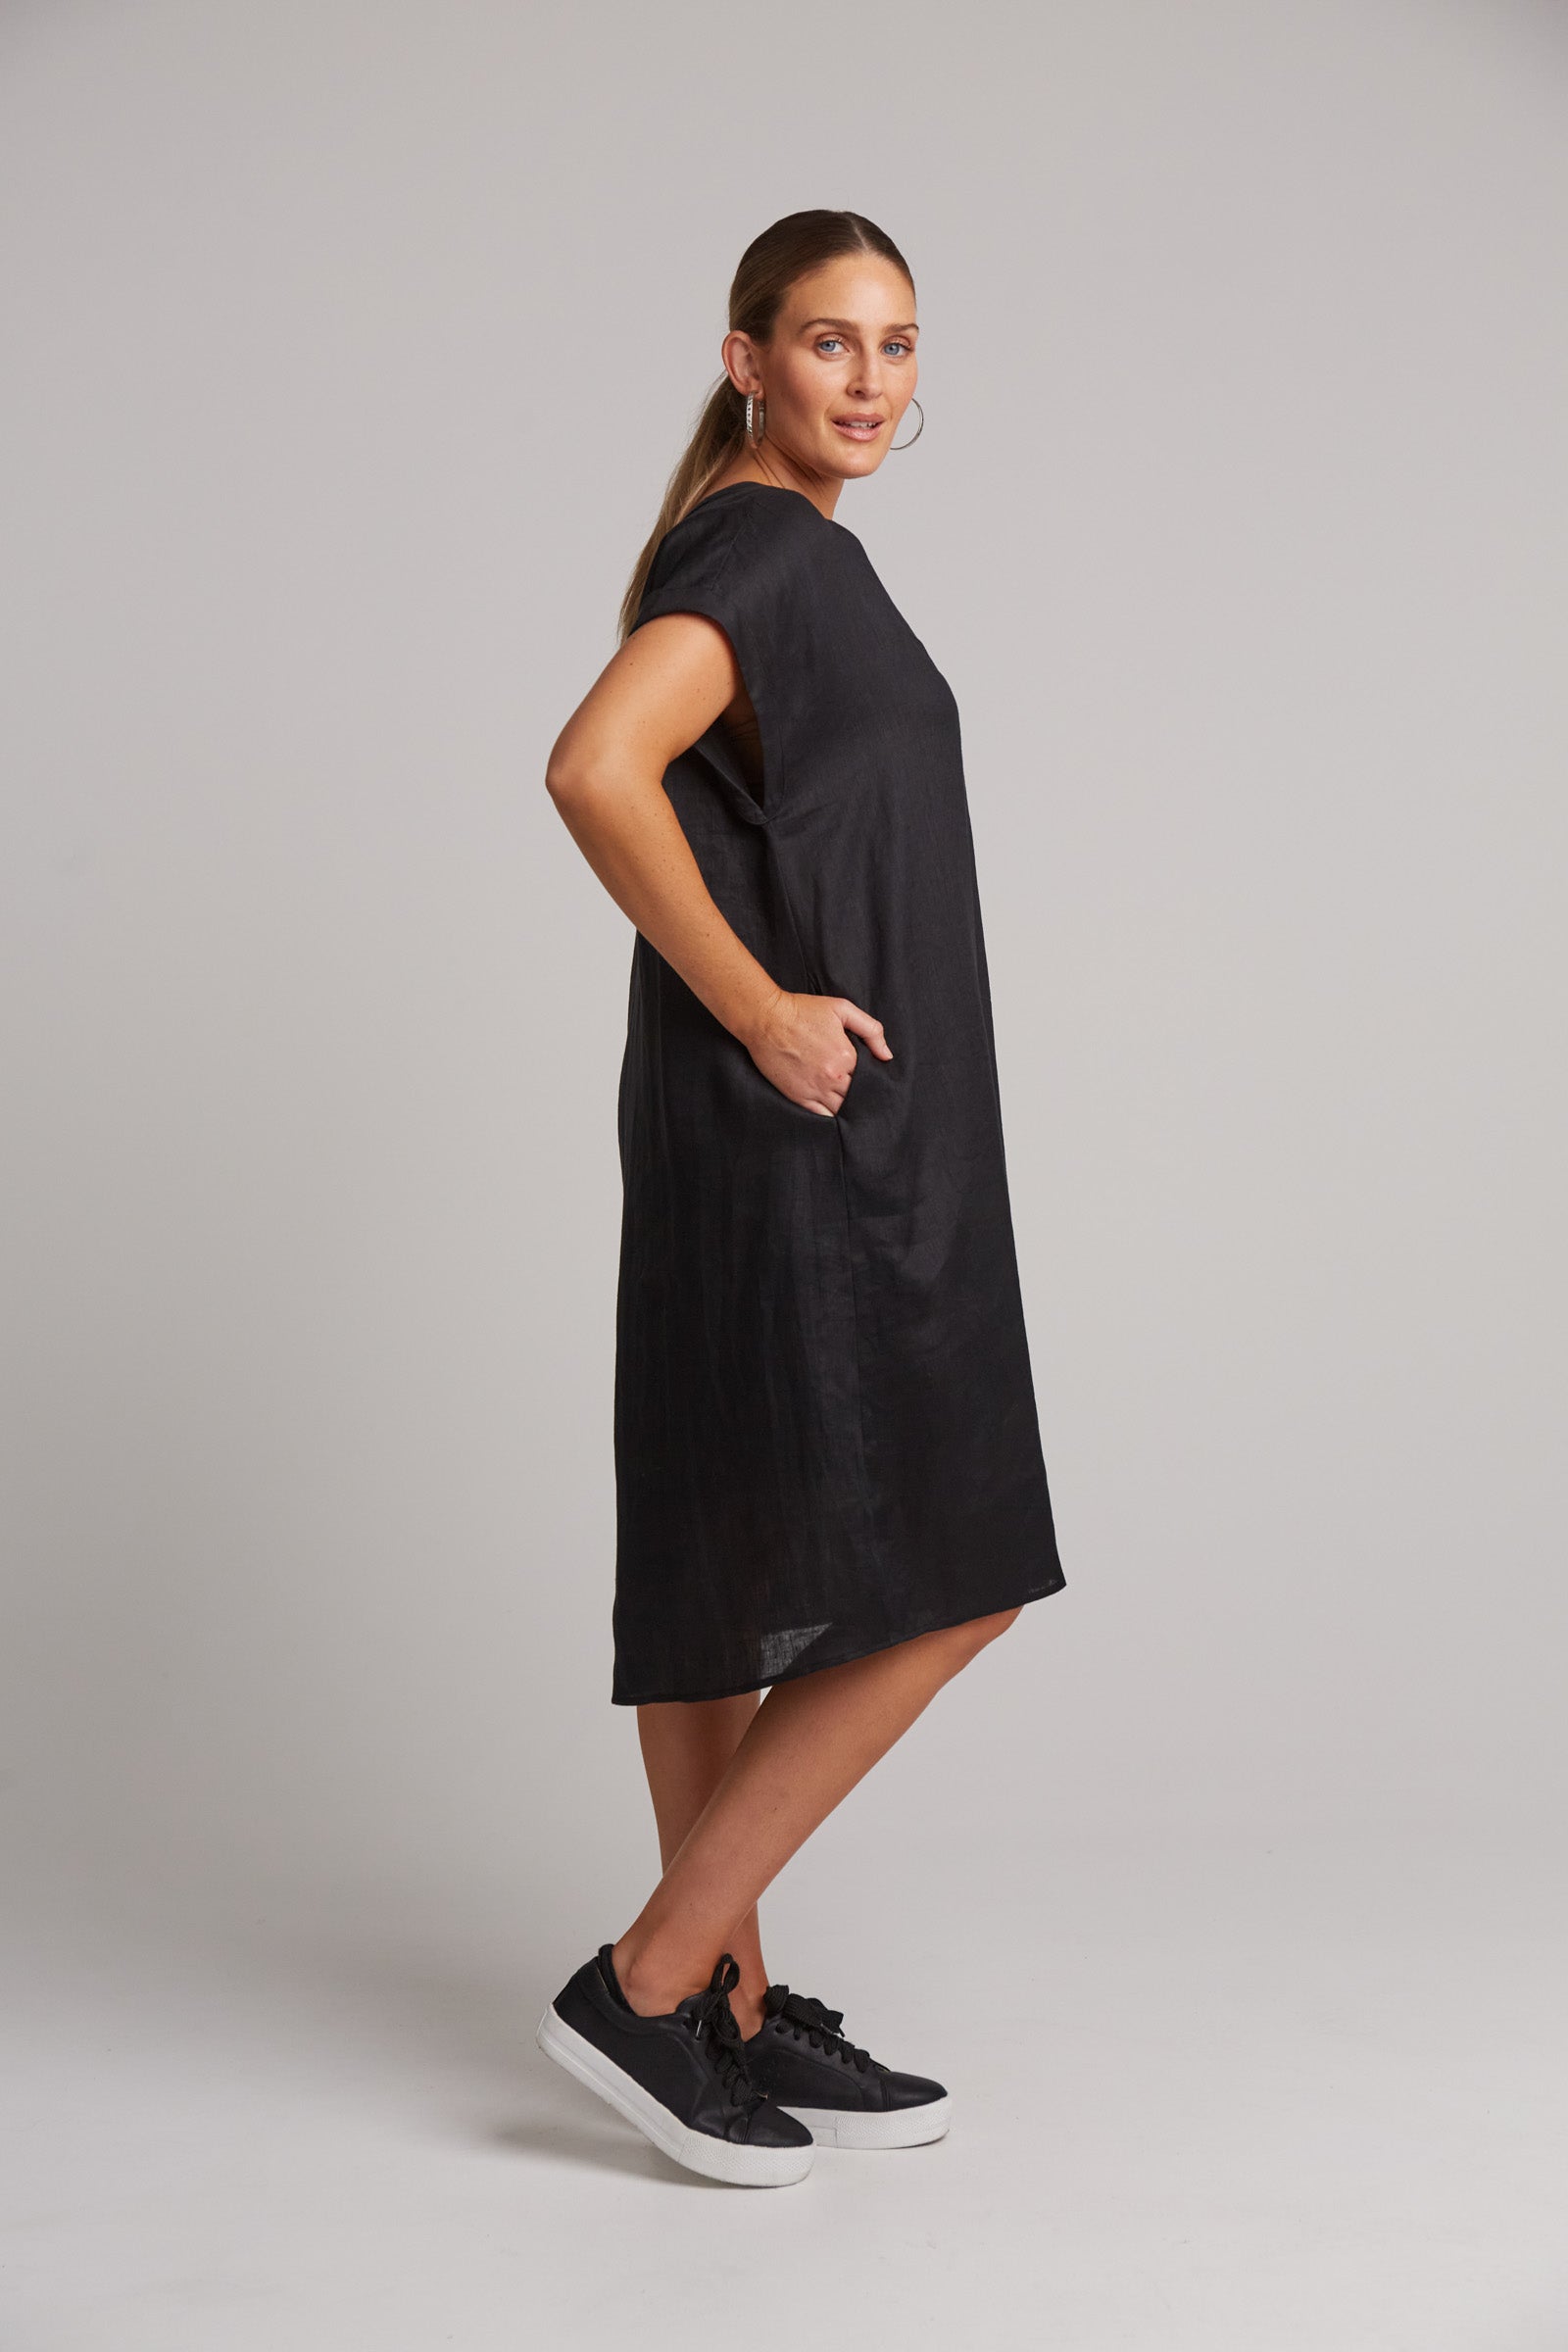 Studio Dress - Ebony - eb&ive Clothing - Dress Mid Linen